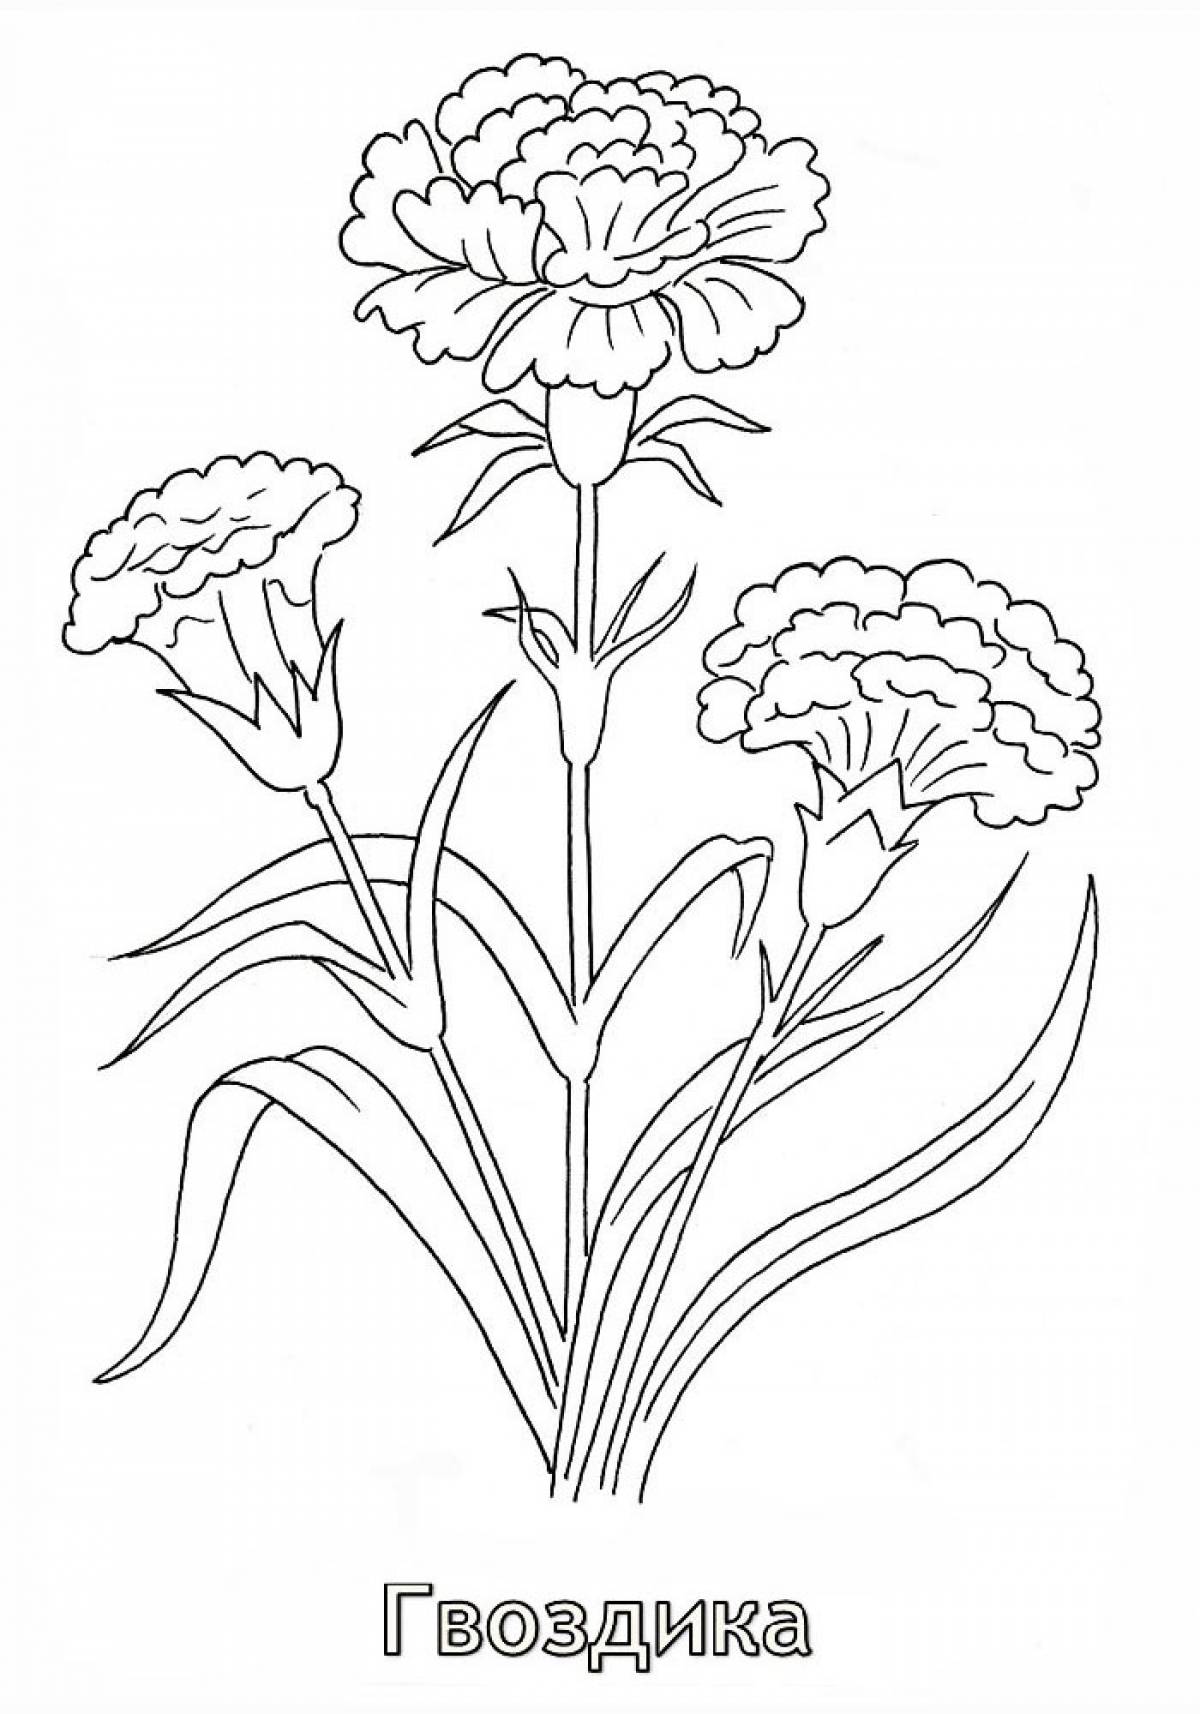 Carnations